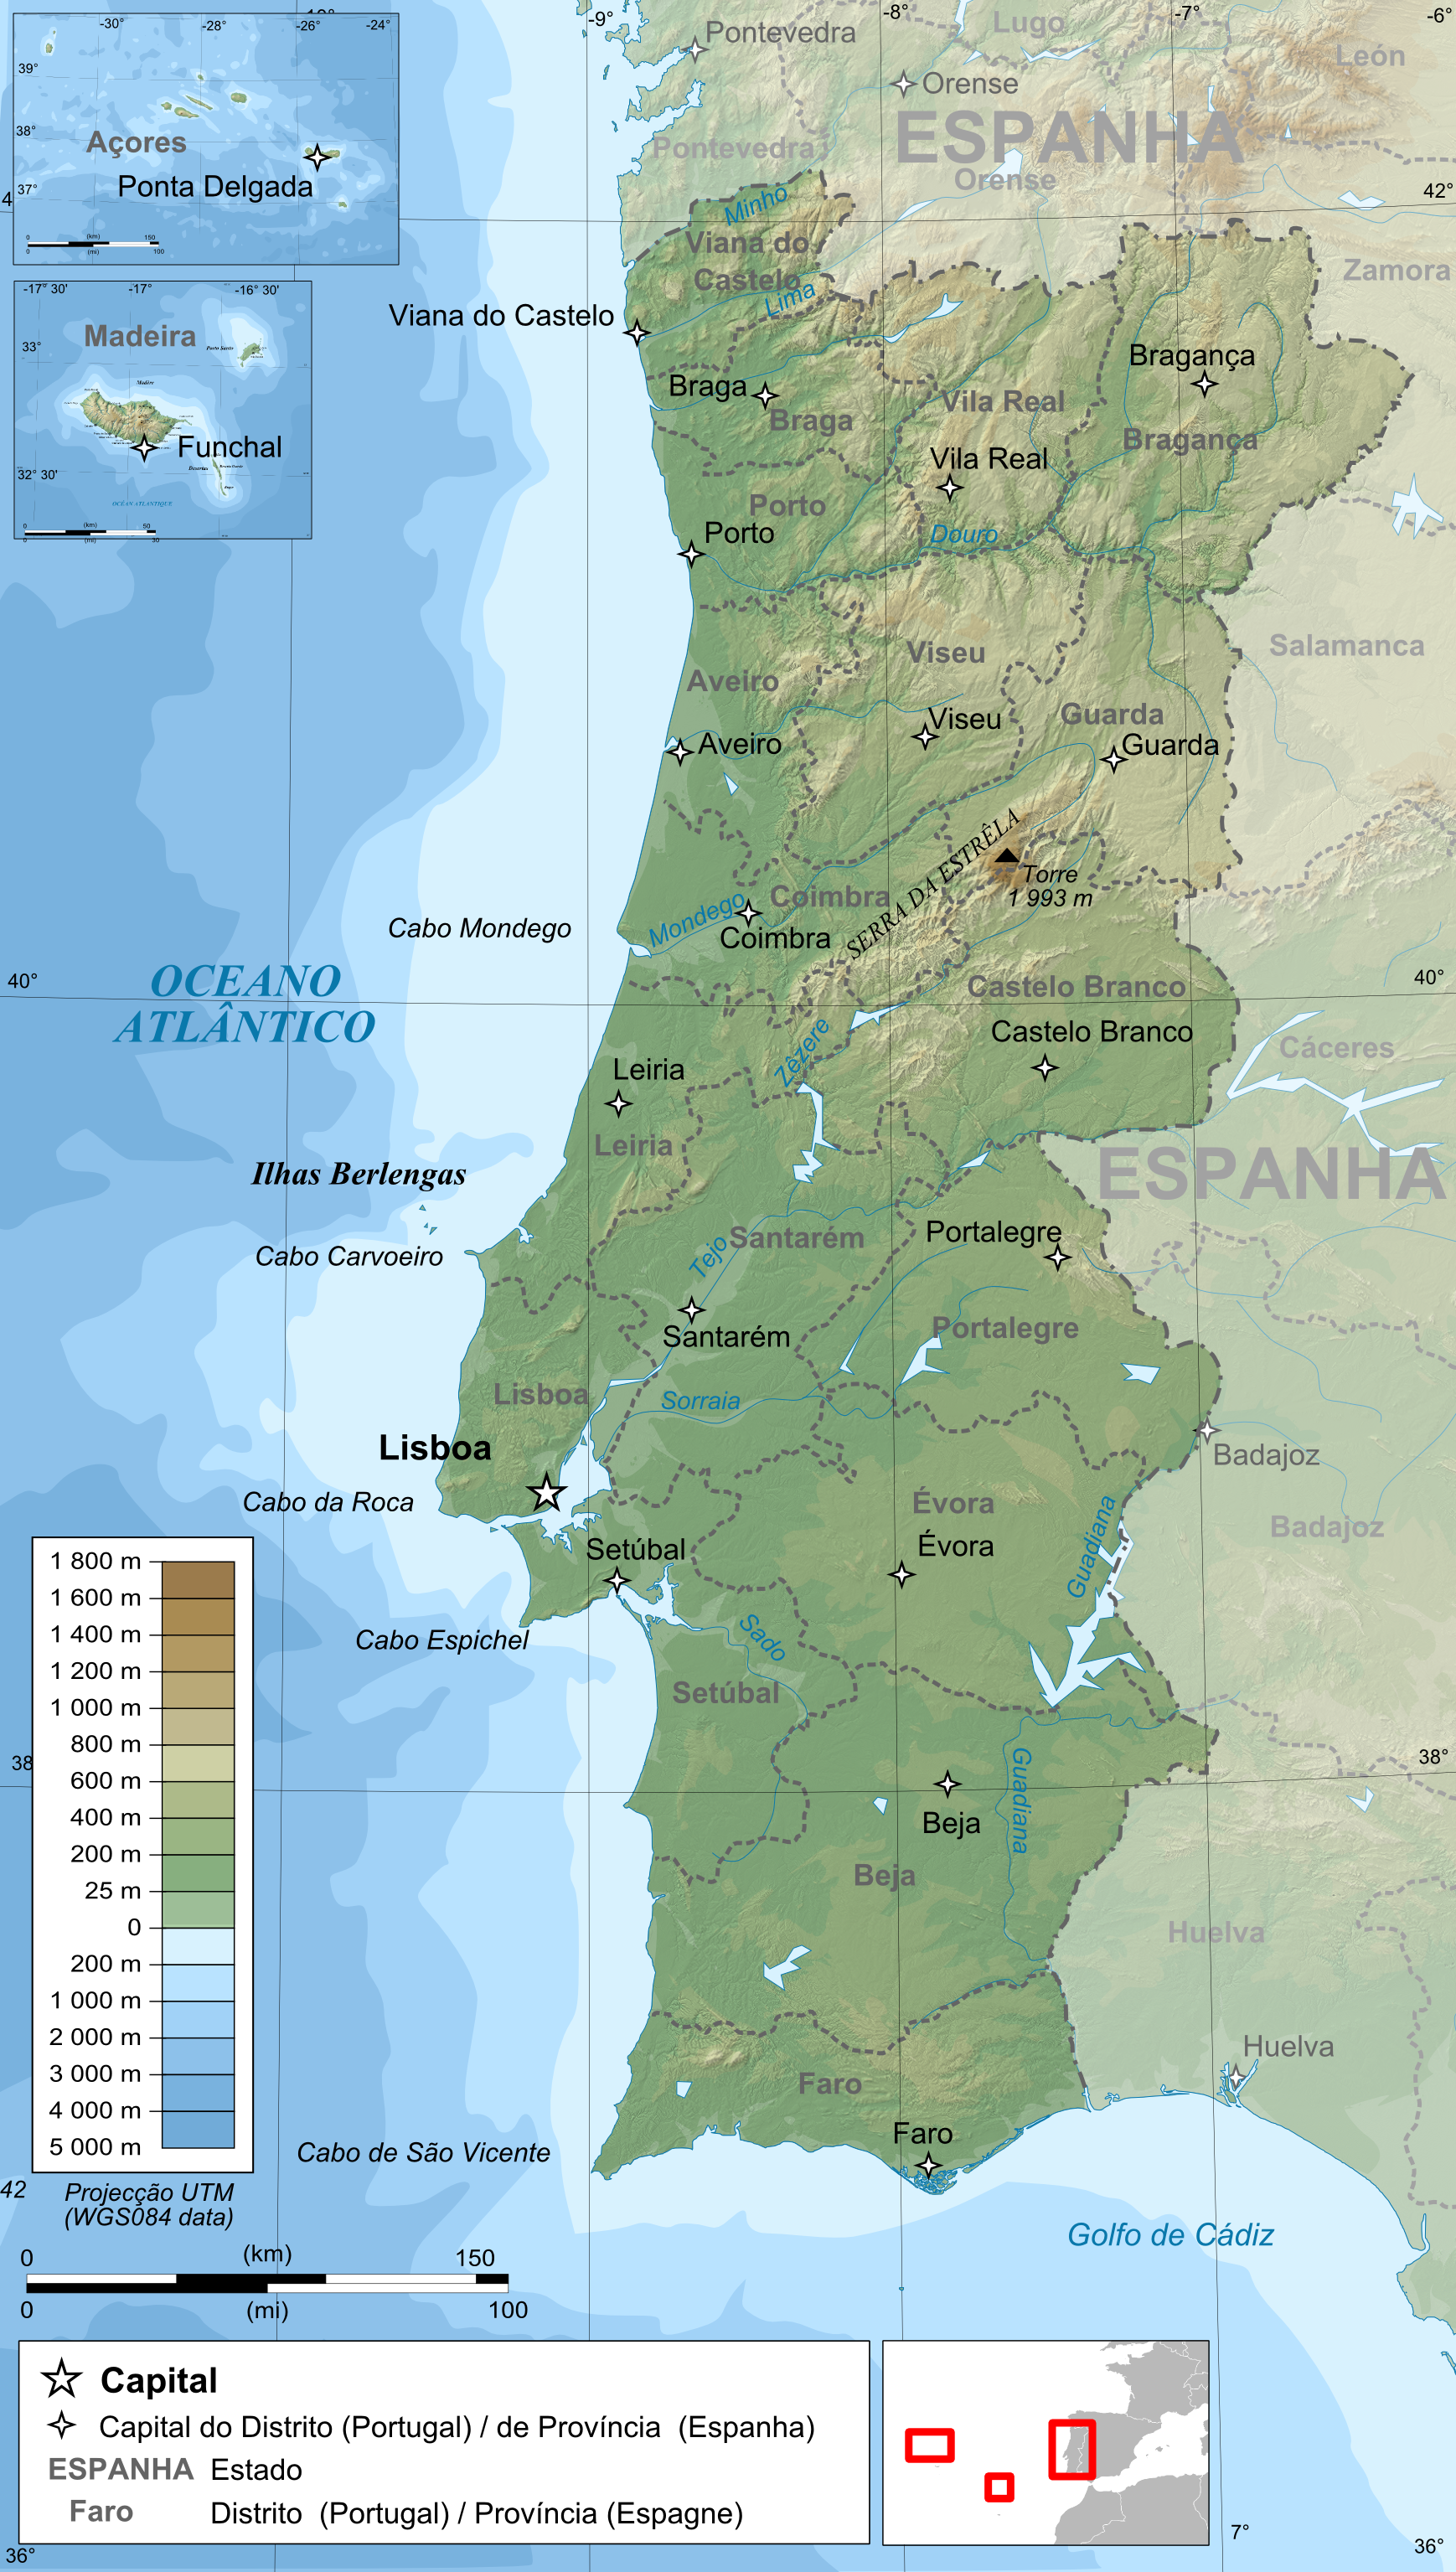 Landkarte Portugal (Topographische Karte) : Weltkarte.com - Karten und